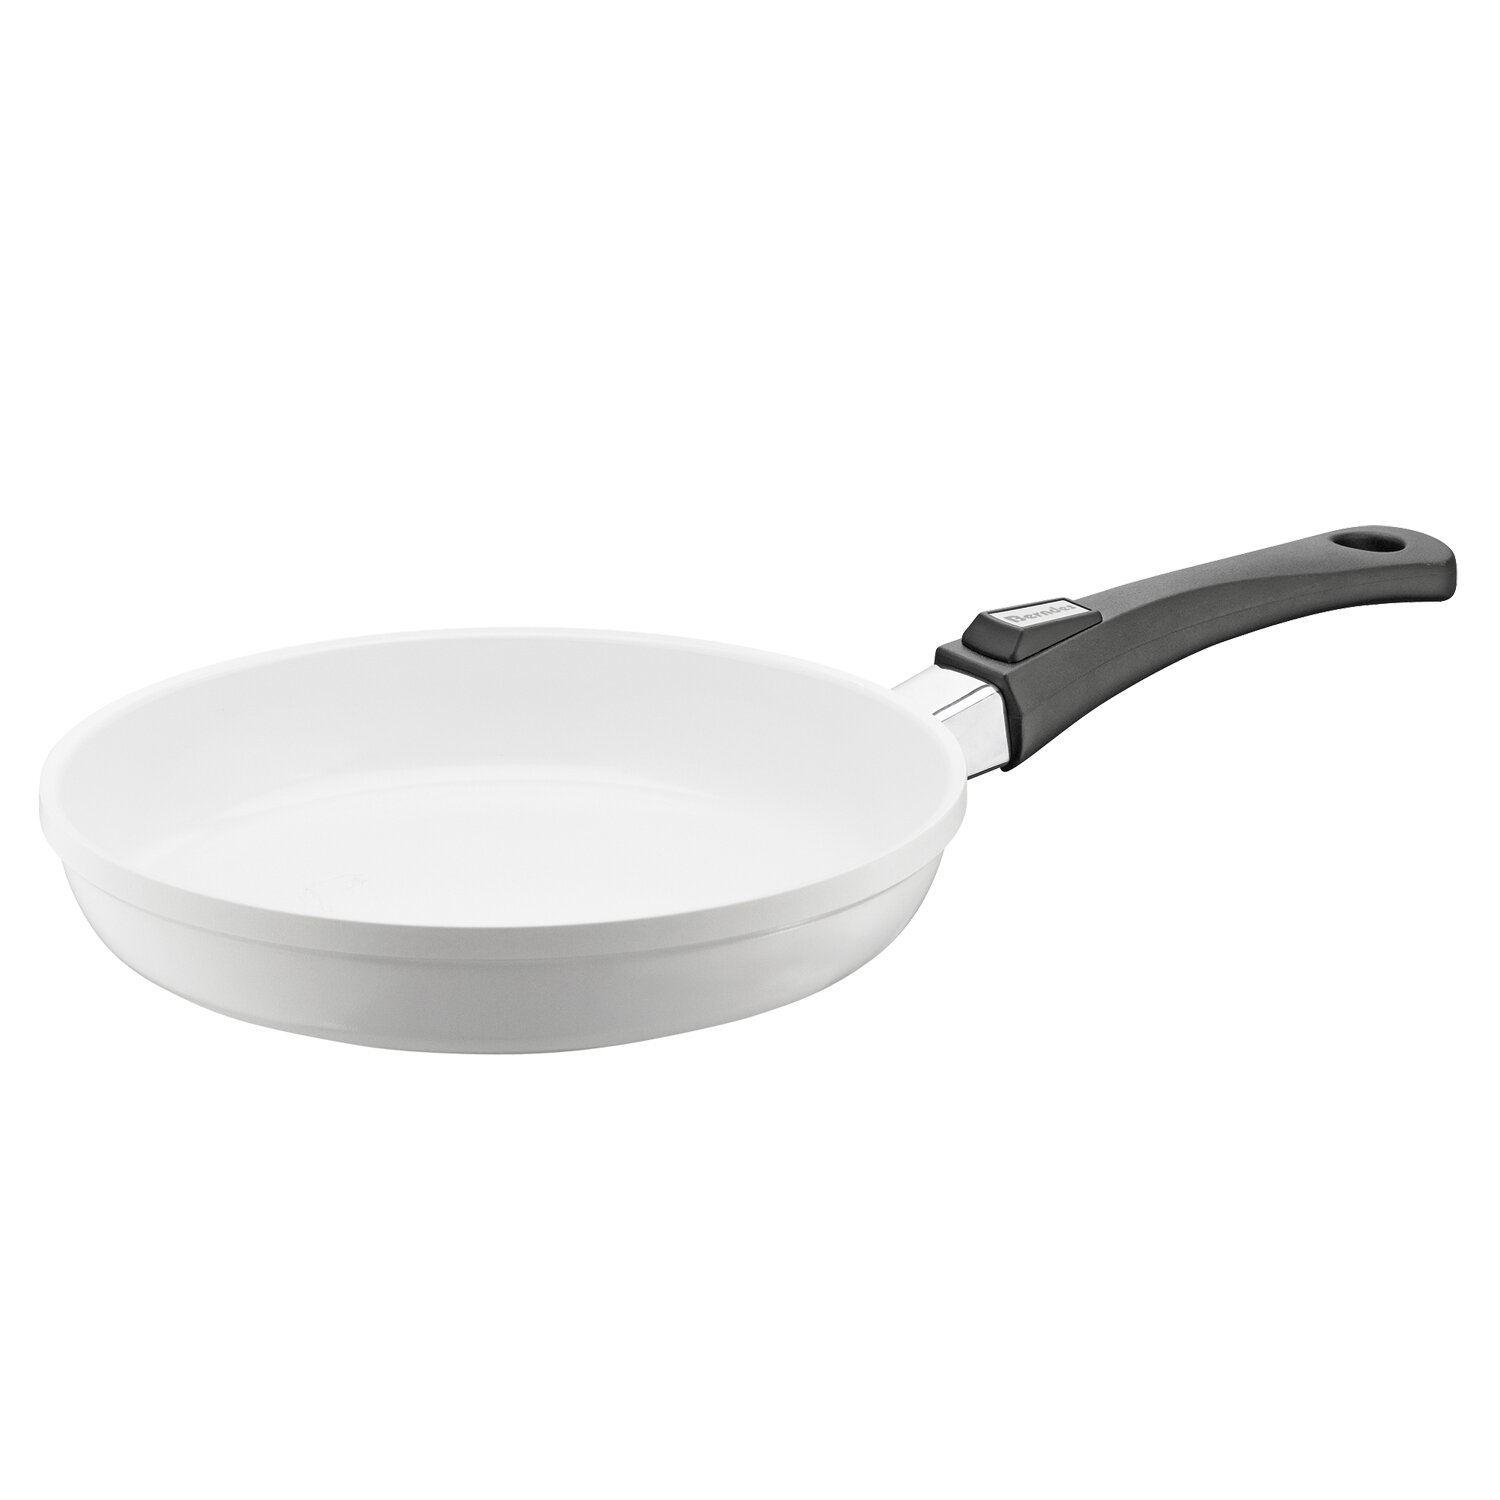 Ceramic Non-Stick Frying Pan, Stainless Steel Induction Frying Pan